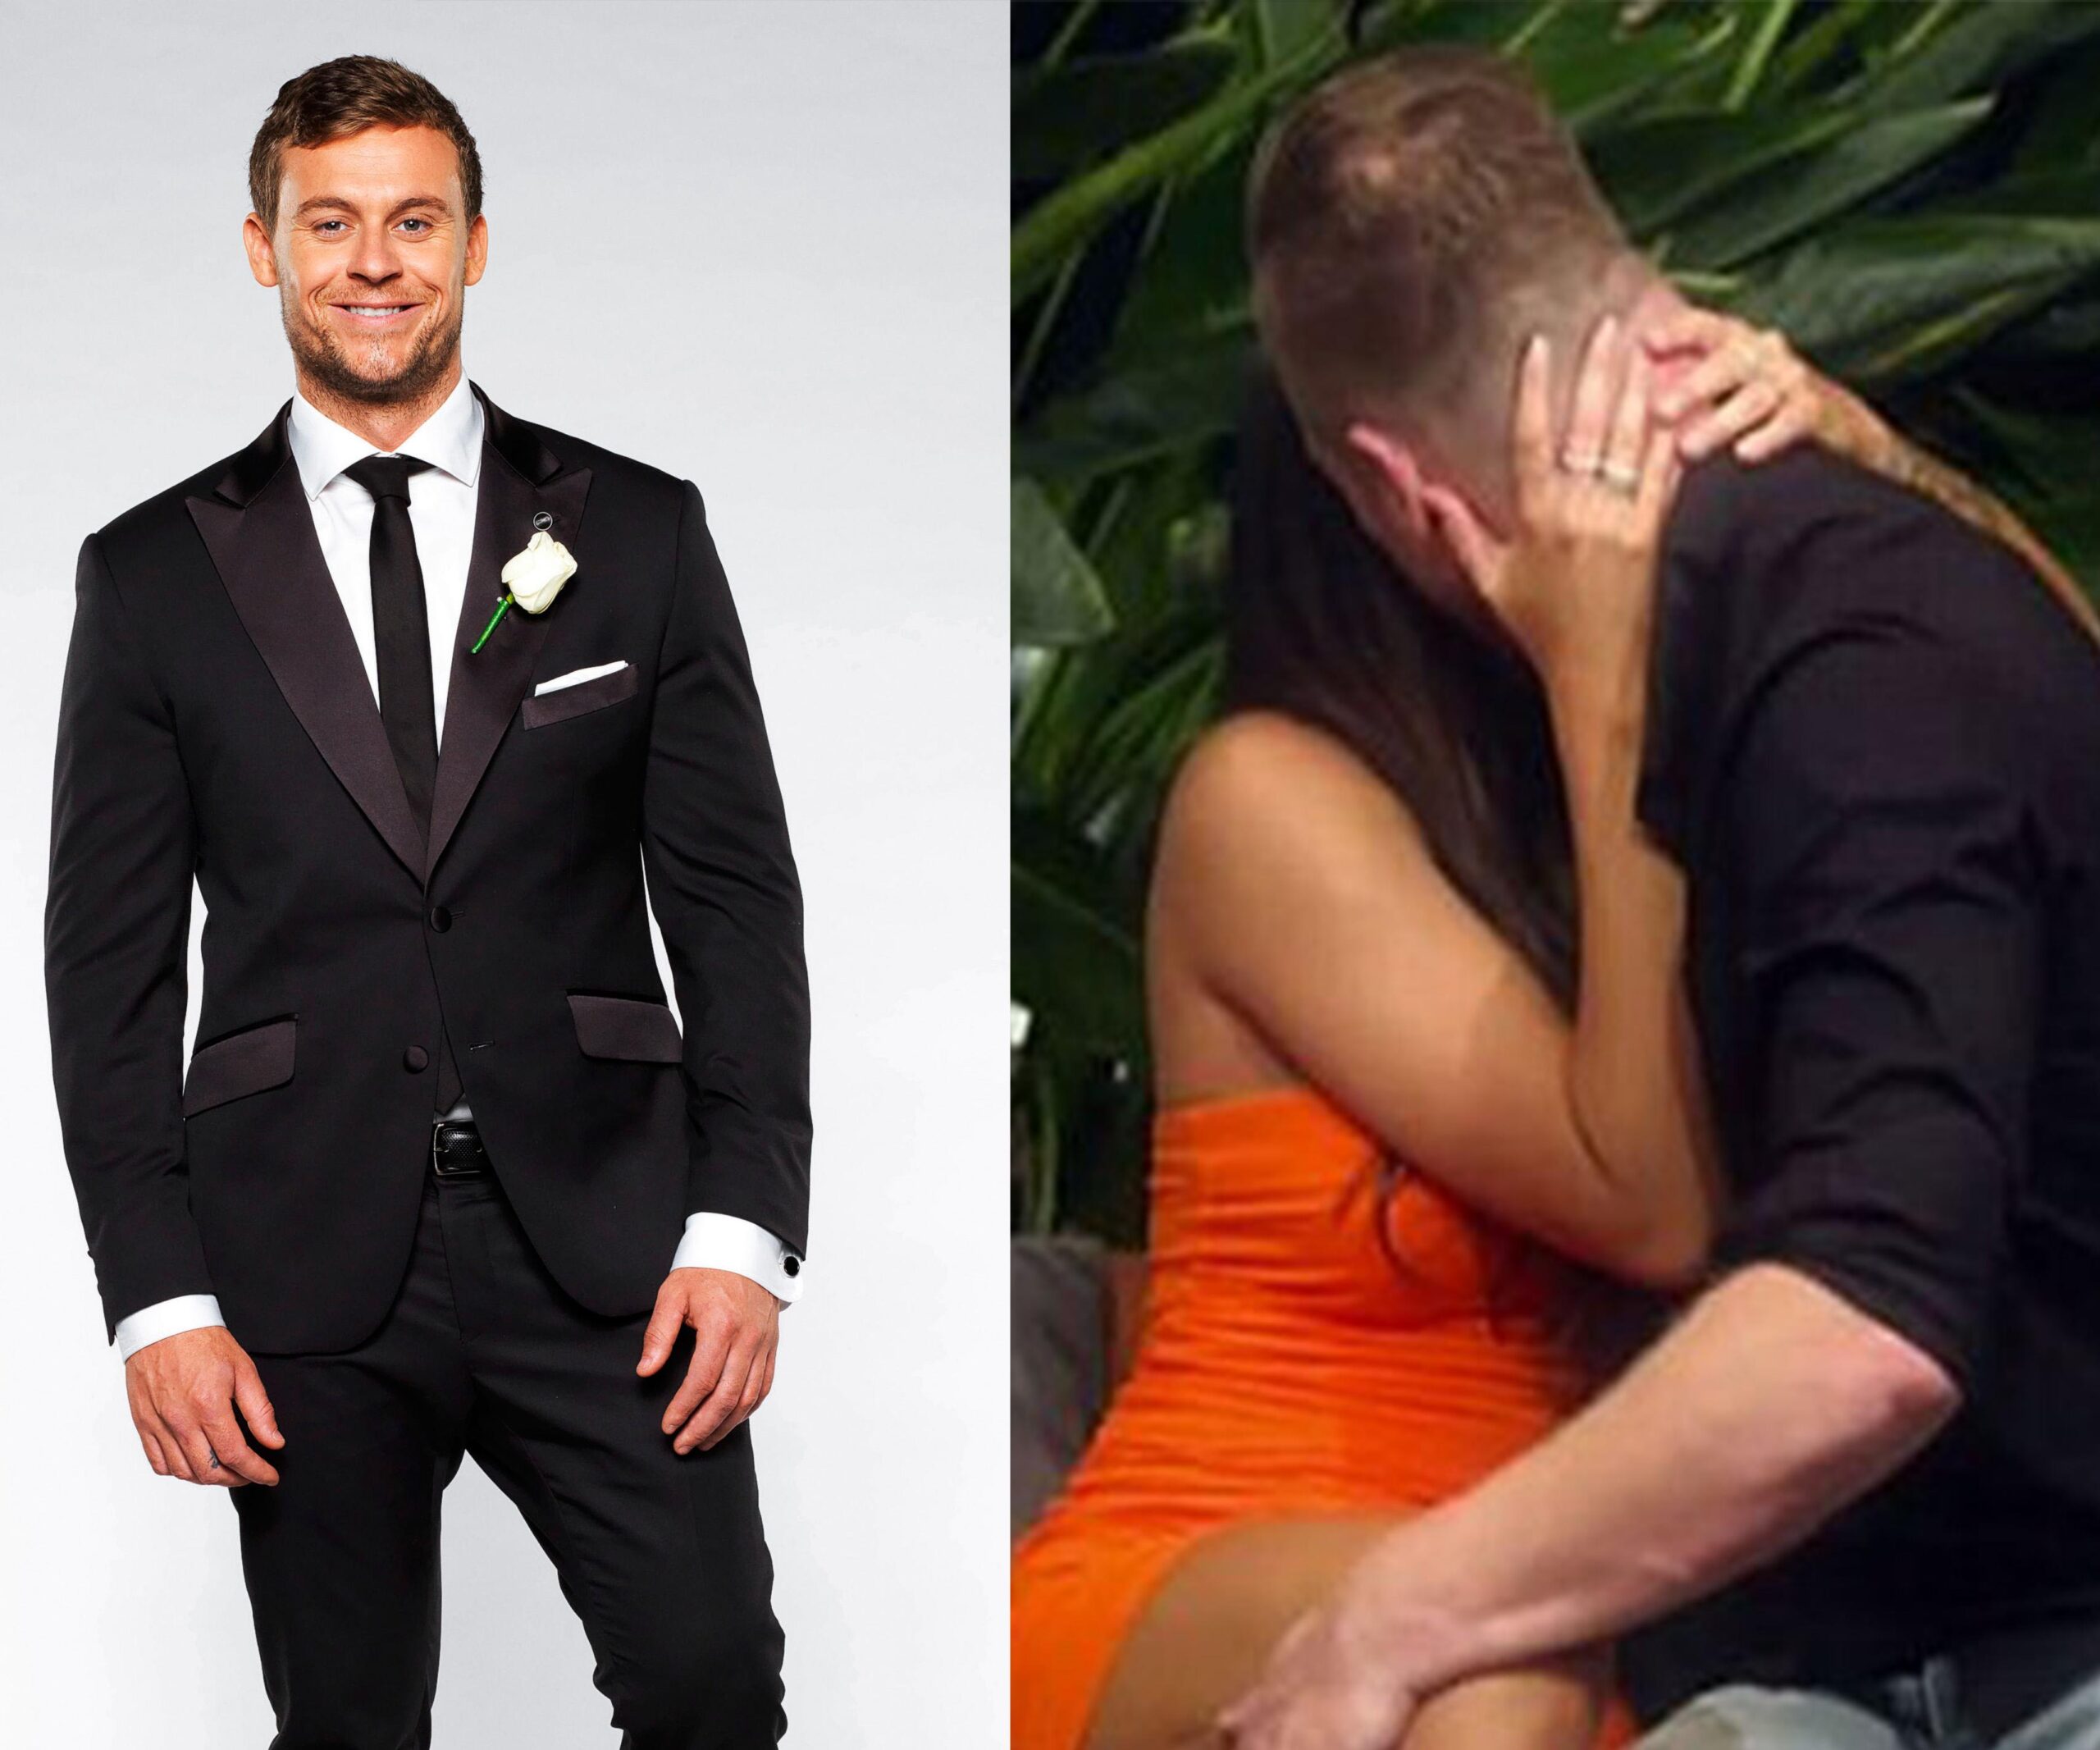 MAFS Australia’s Ryan says he ‘felt like an idiot’ after Dean and Davina cheating scandal